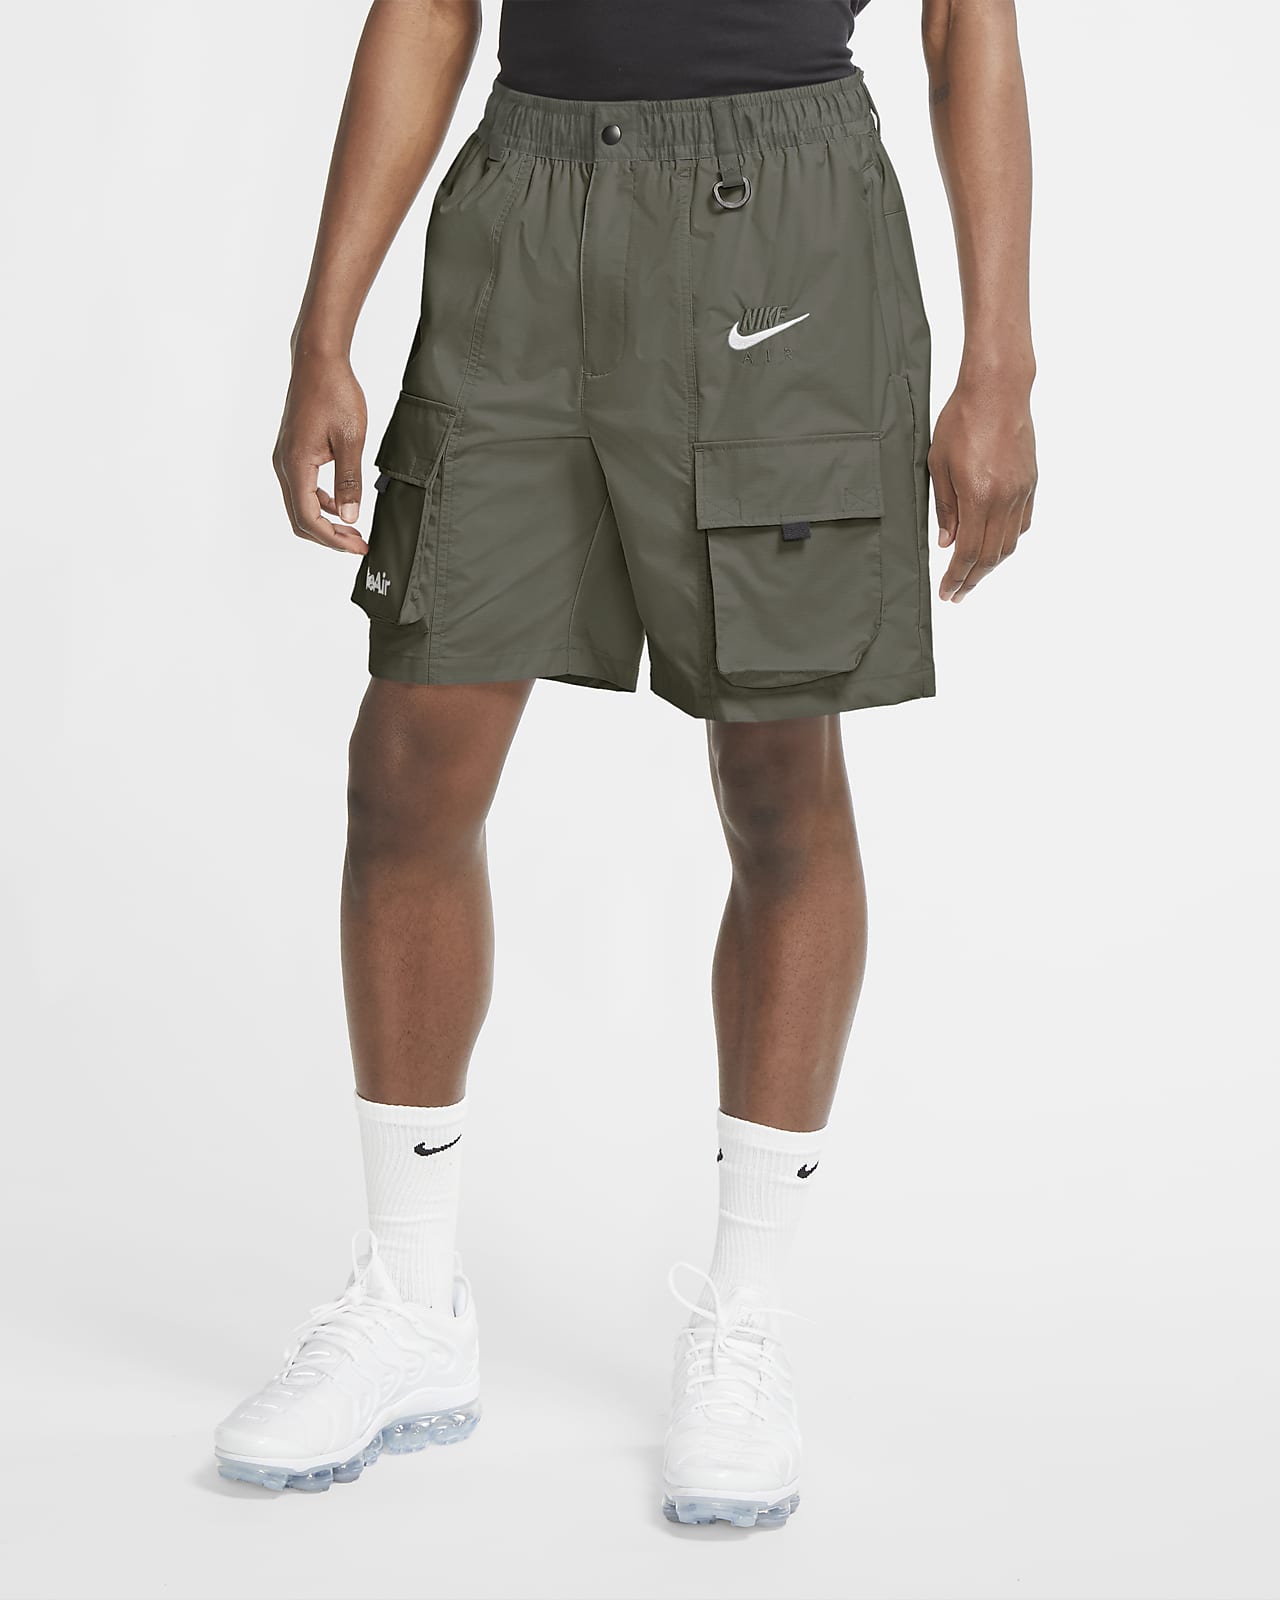 nike air max with shorts